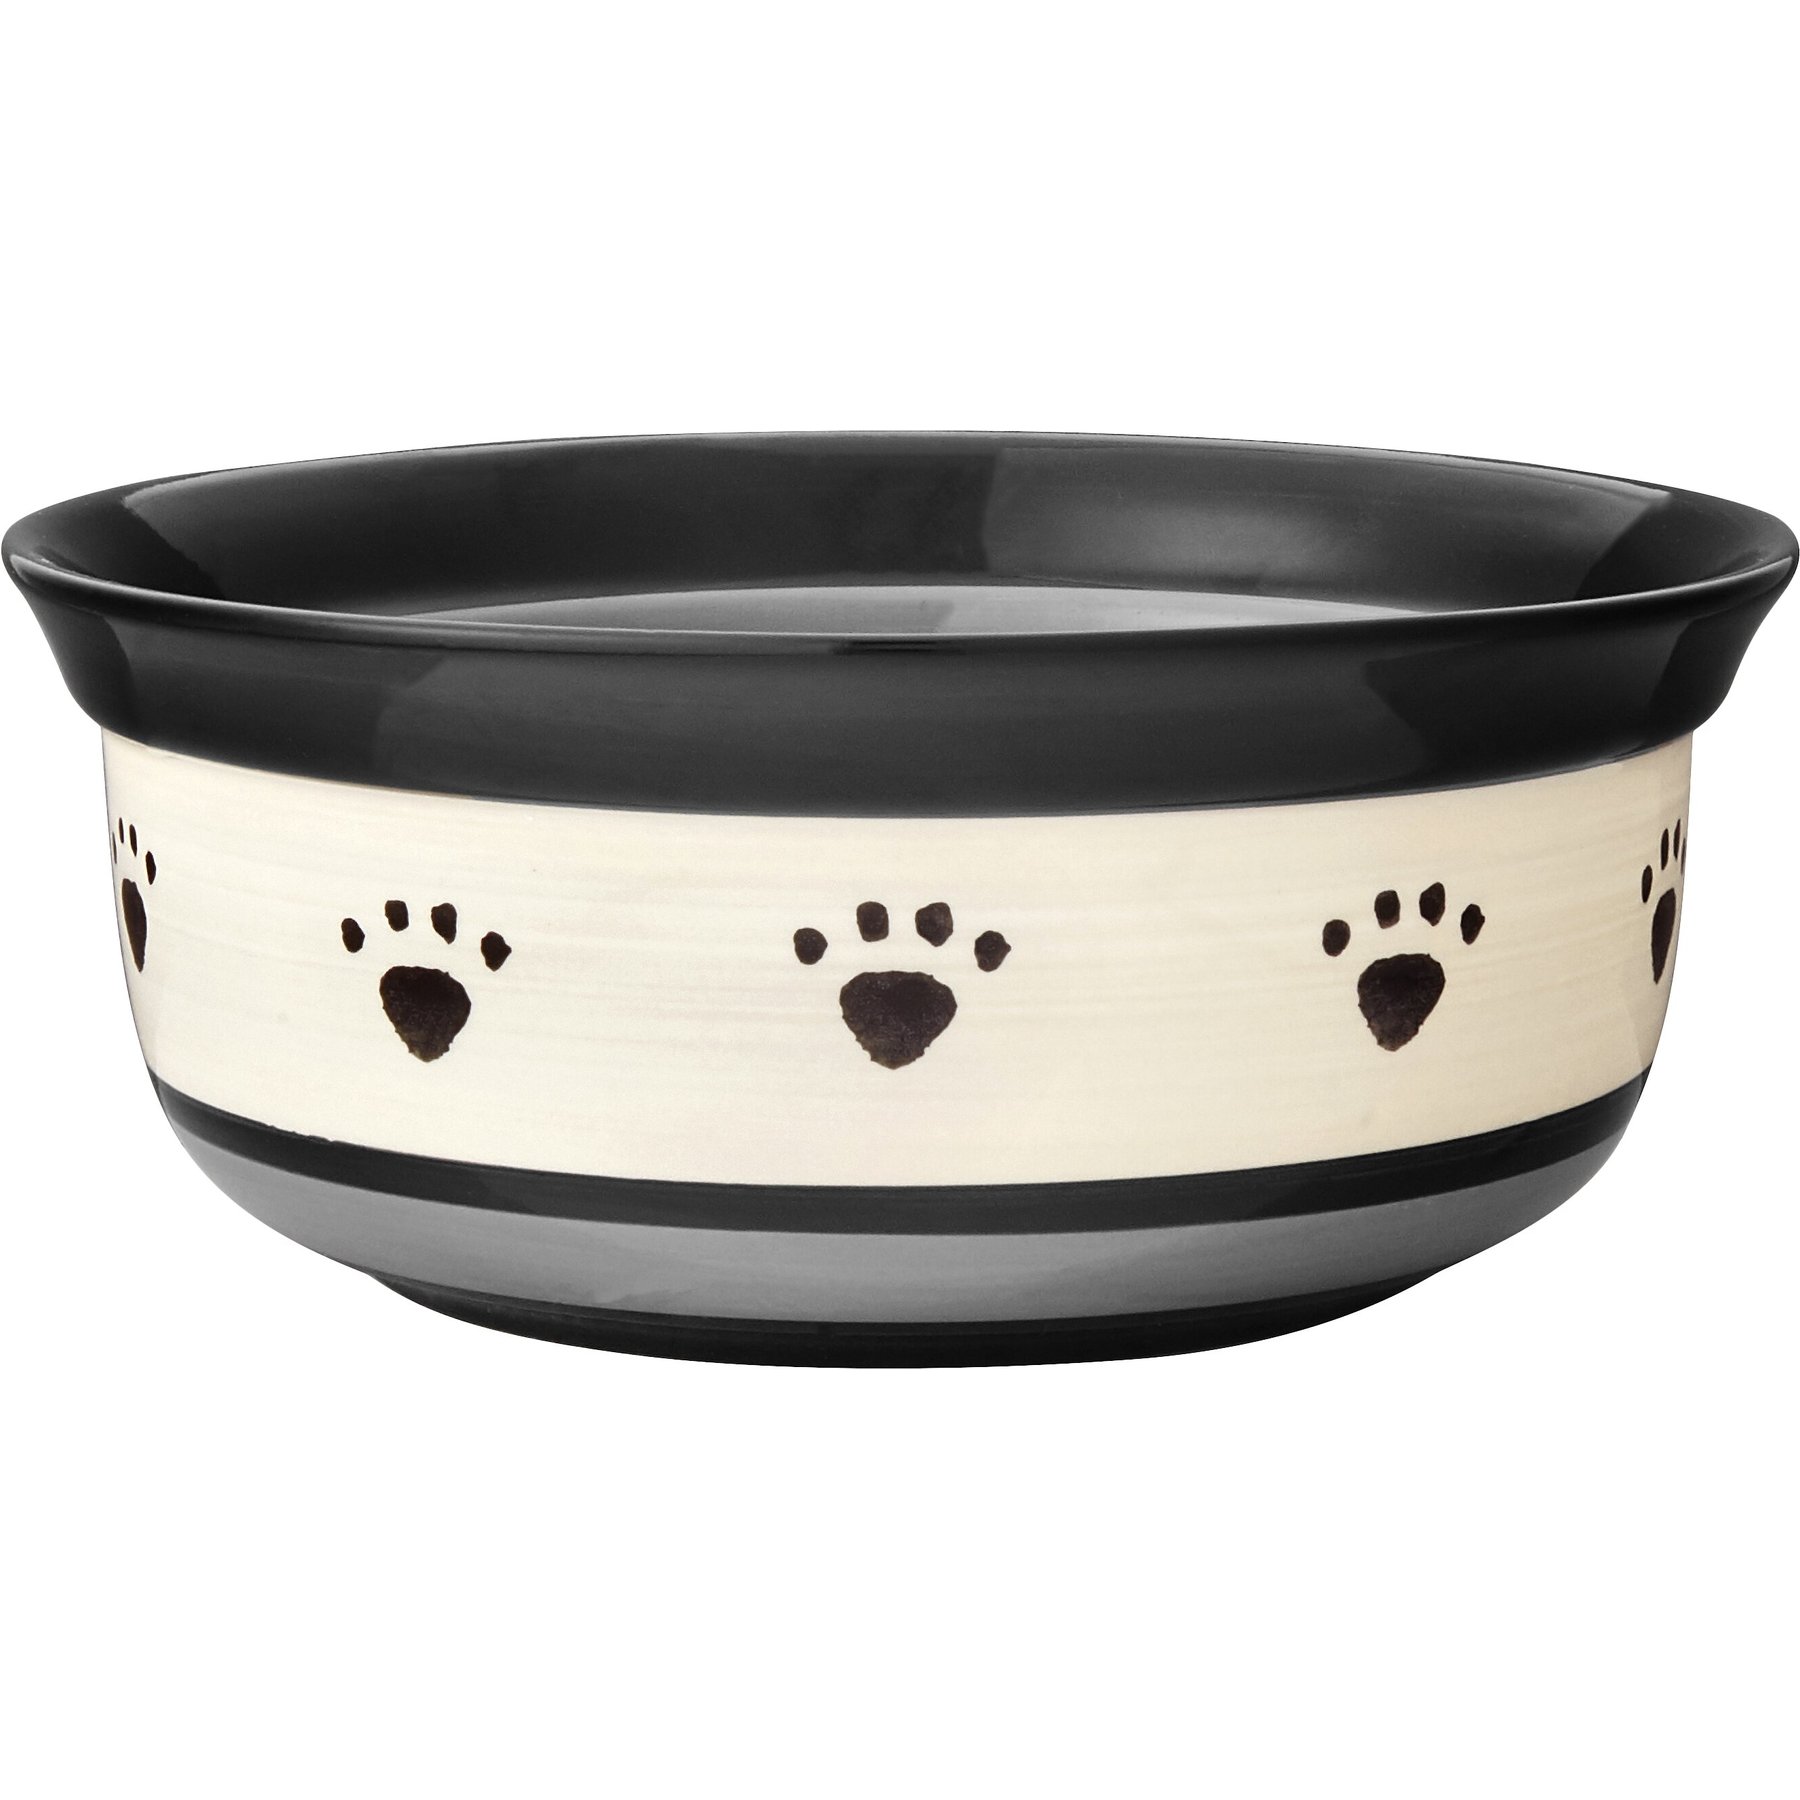 Waggo Uplift Black Dog Bowls, 2 Cups